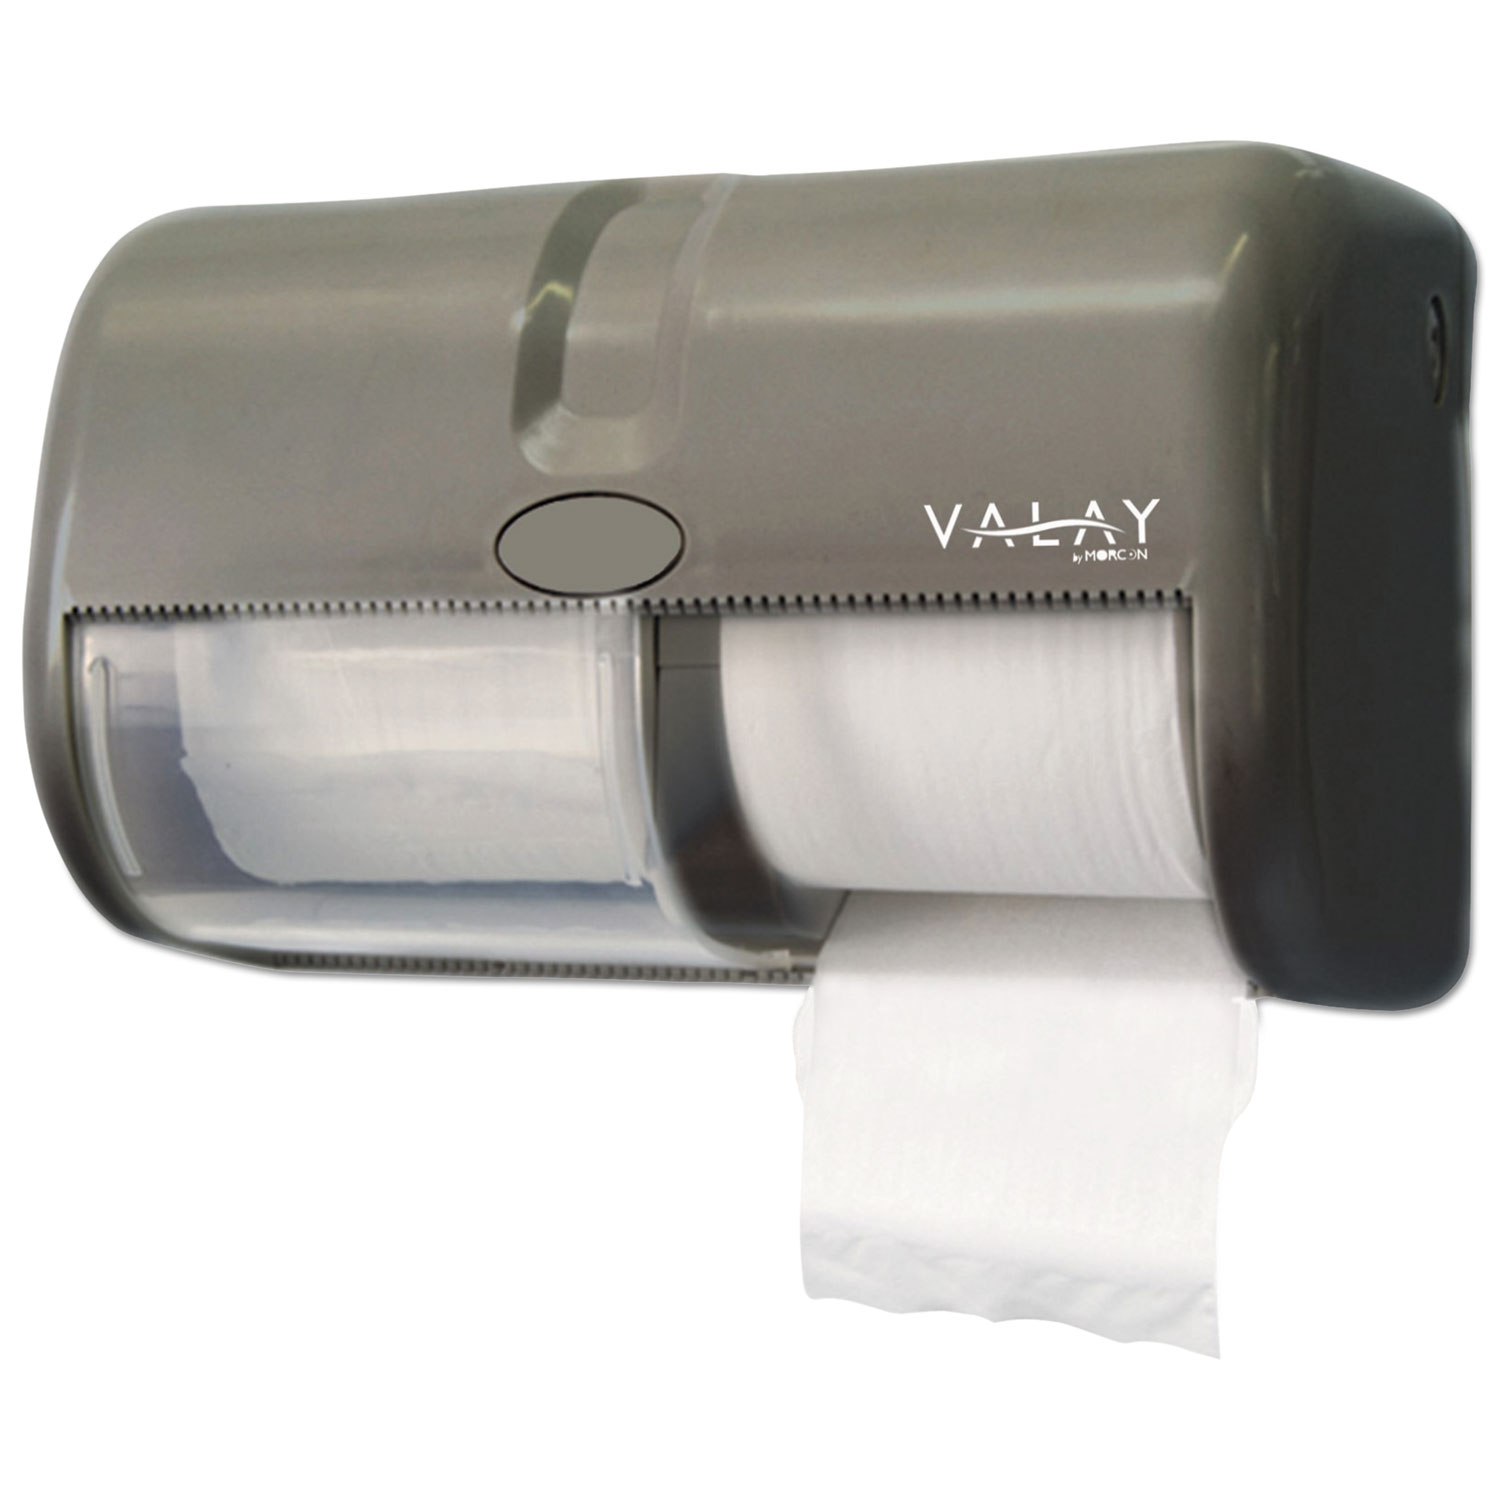 Valay Toilet Tissue Dispenser, 11.5 x 6.5, Black